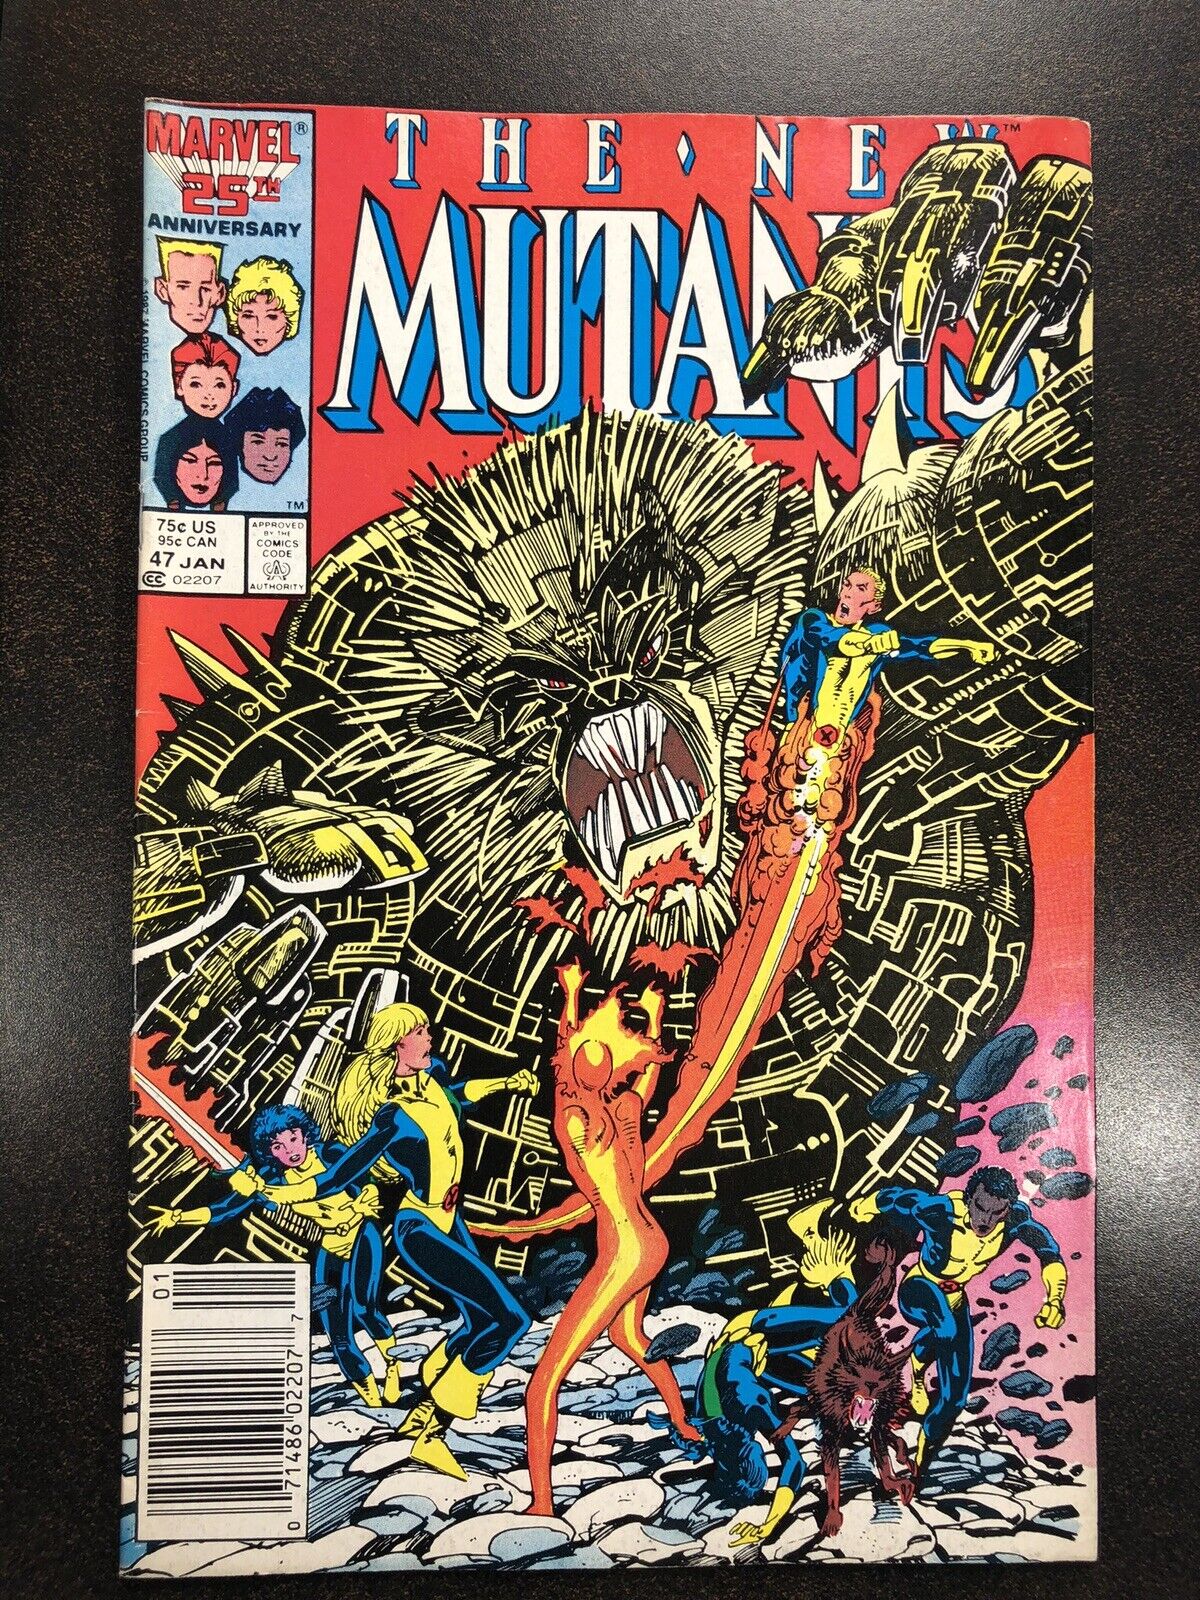 New Mutants #47 - Magus & the New Mutants Battle Marvel Comics 25th Anniversary